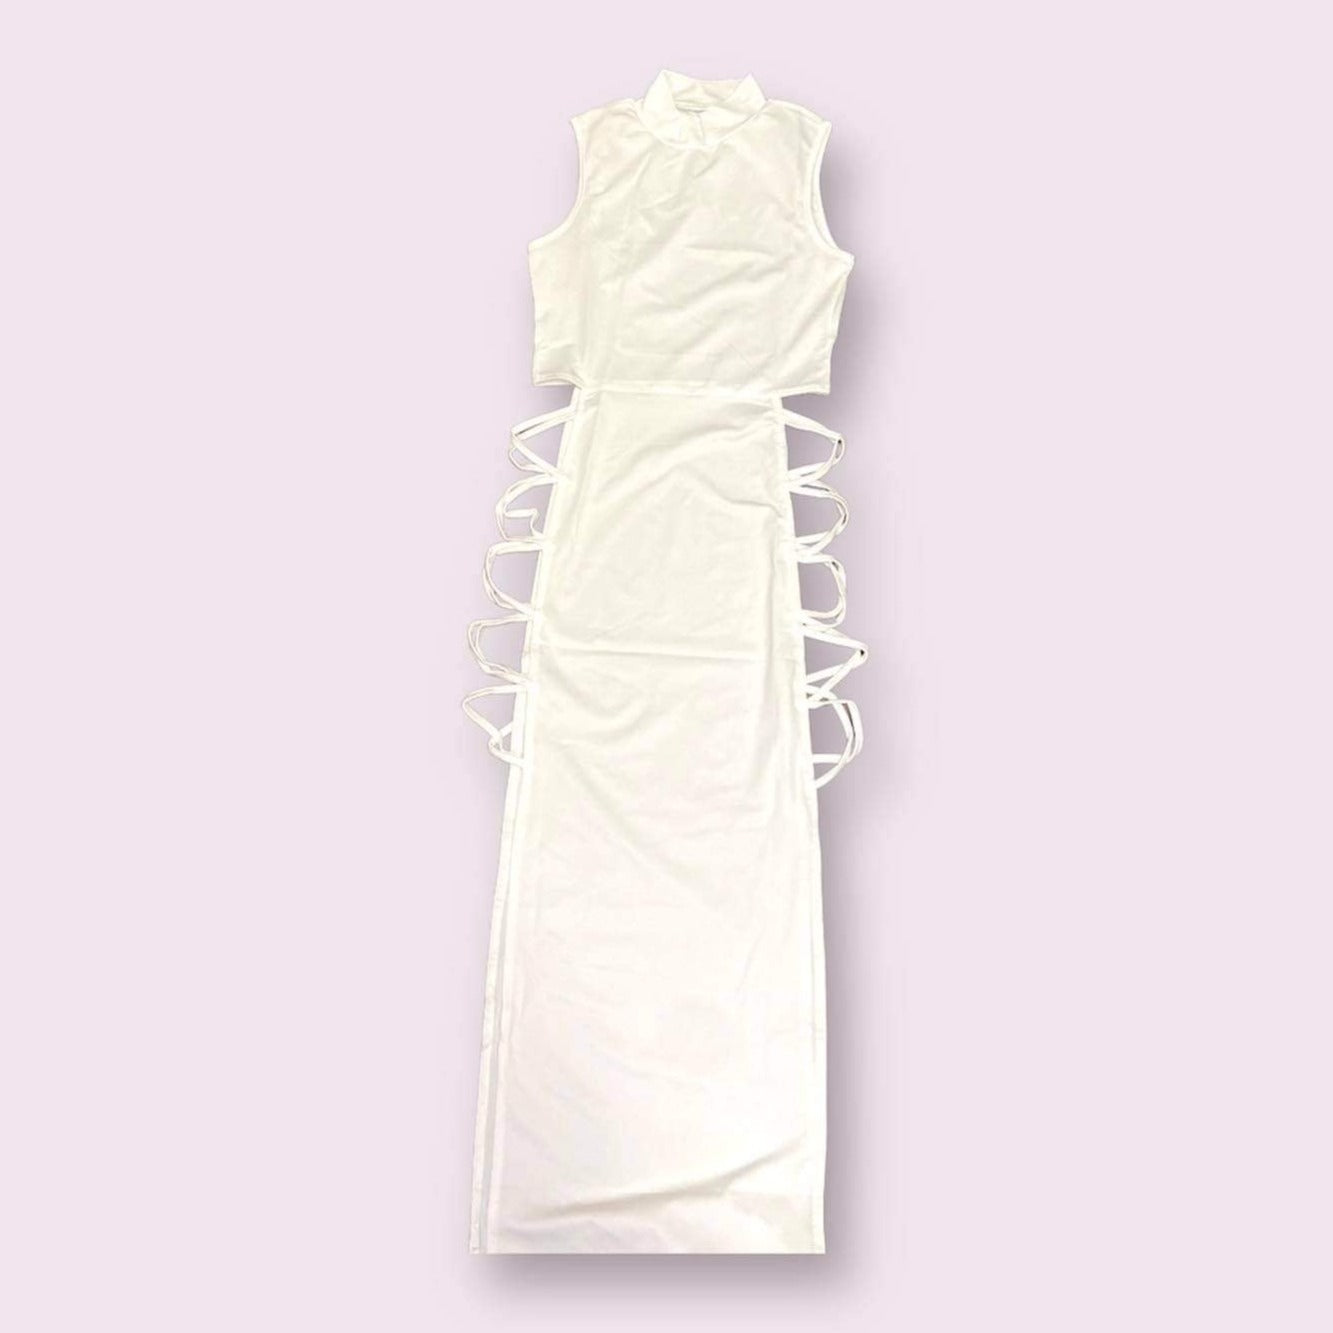 Hot Date Bandage Dress - BaeBekillinem- Polyester/ Spandex- Deep slits- white